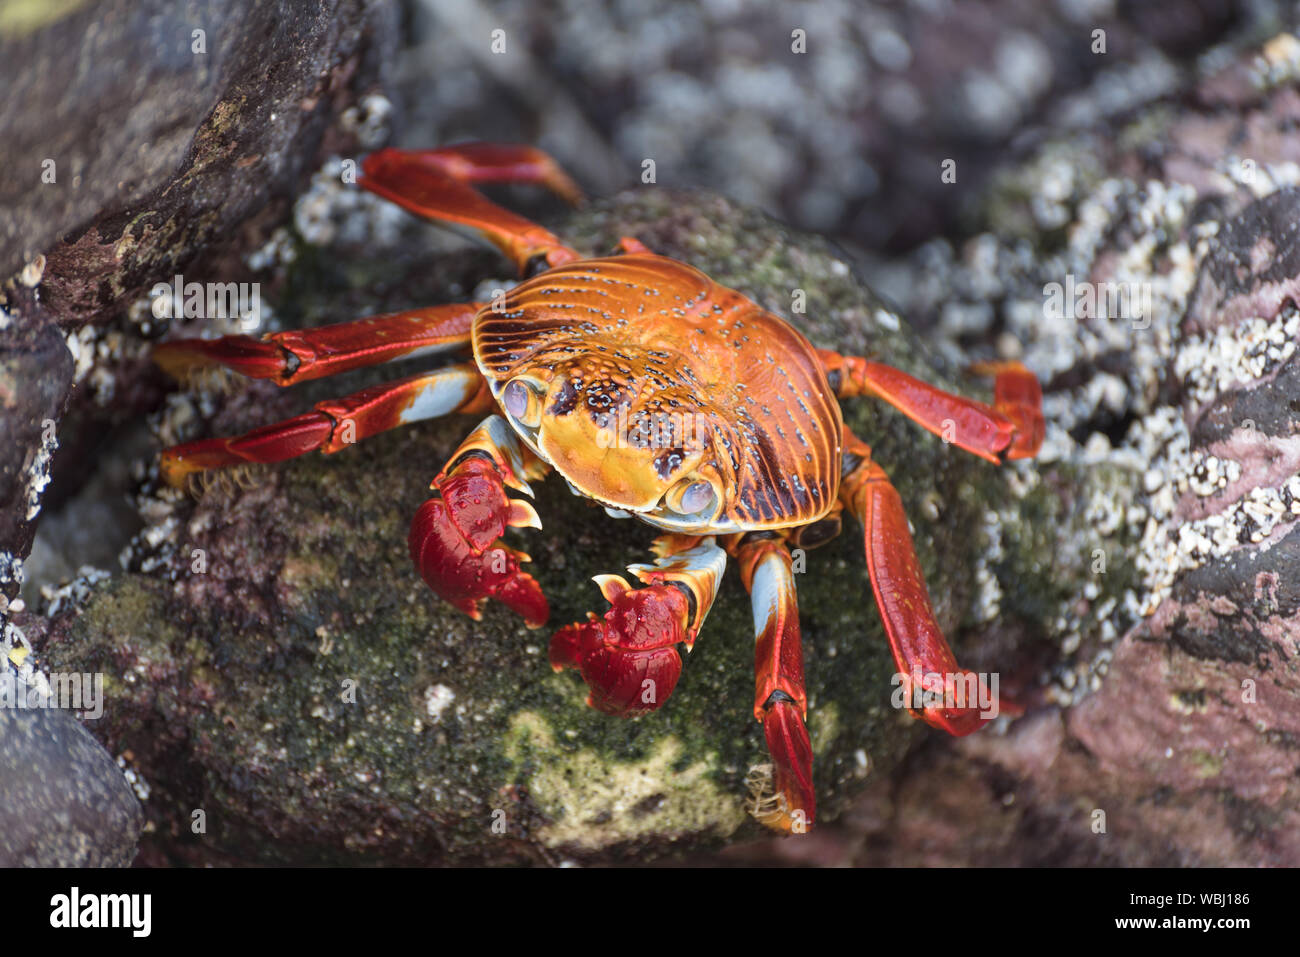 Red Rock Crab on Galapagos Islands, Ecuador, South America. Stock Photo